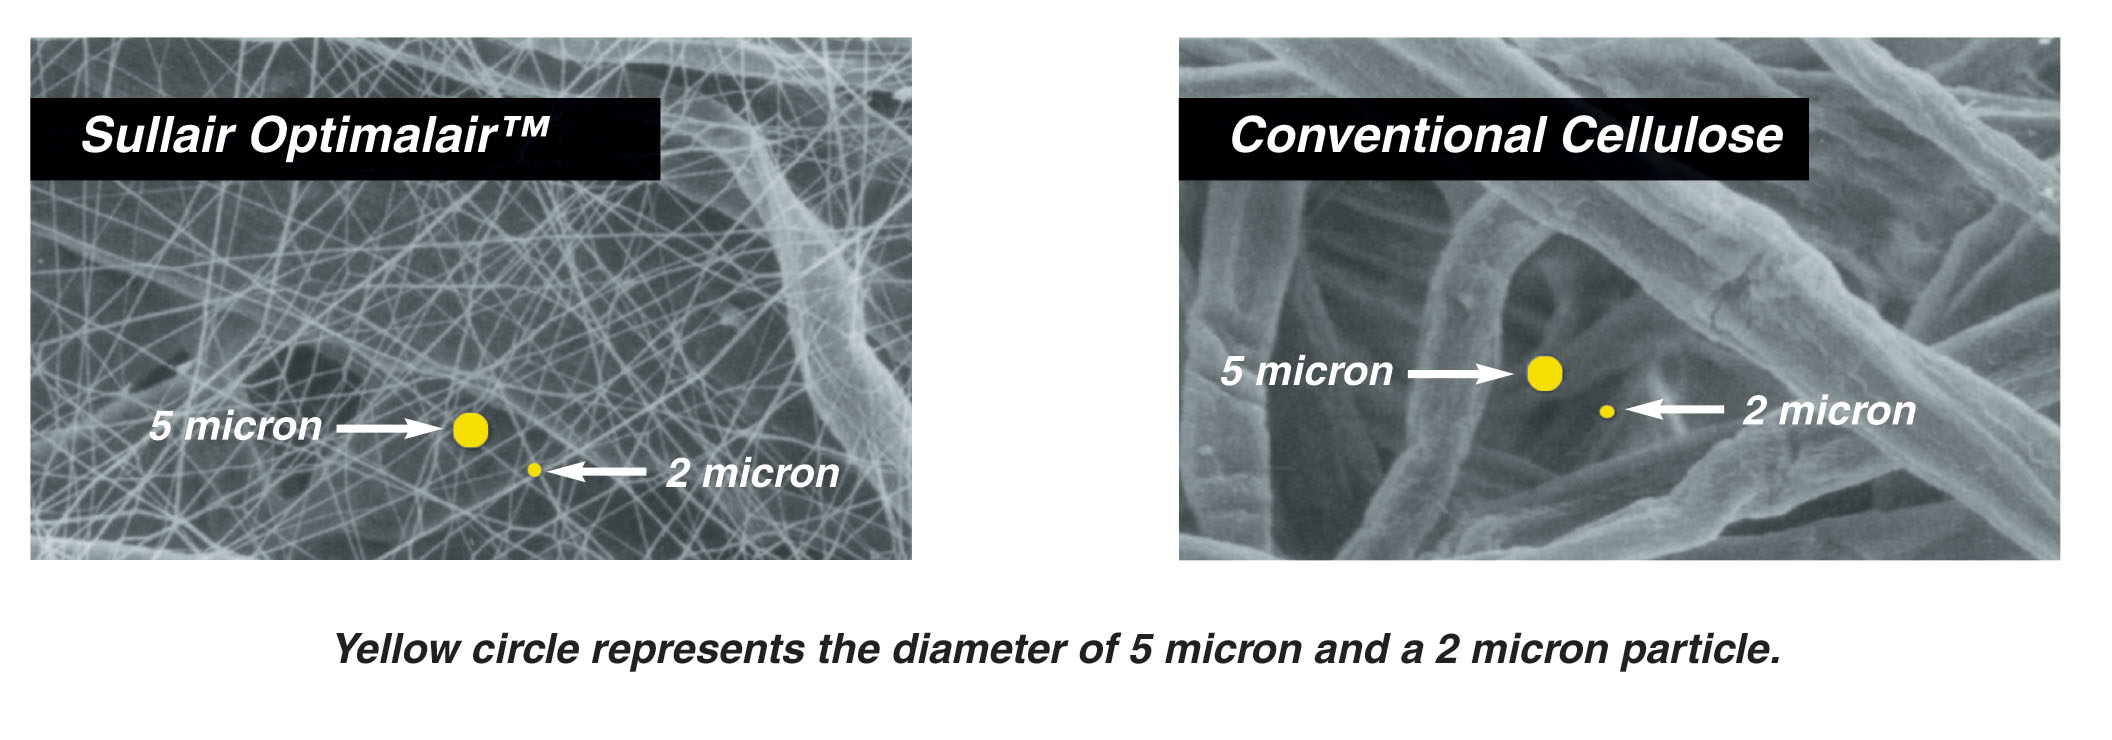 OptimalAir versus conventional cellulose filter